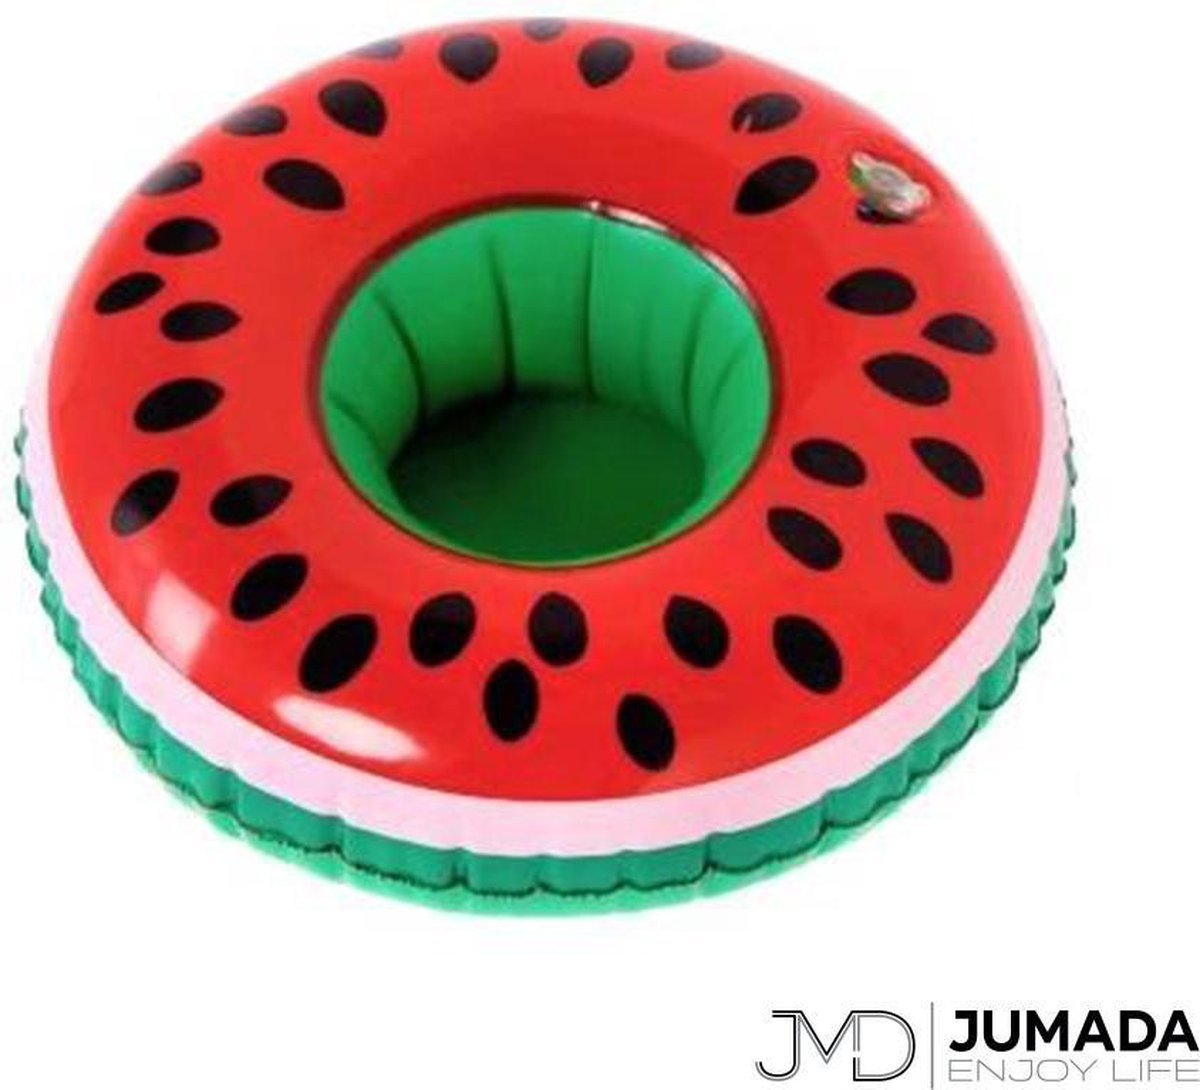 Jumada's Opblaasbare Bekerhouder Watermeloen - Voor Bekers / Blikken / Flessen - Opblaas Drankhouder - Zwembadaccessoire - Opblaasfiguur - Watermeloenen - Roze / Groen